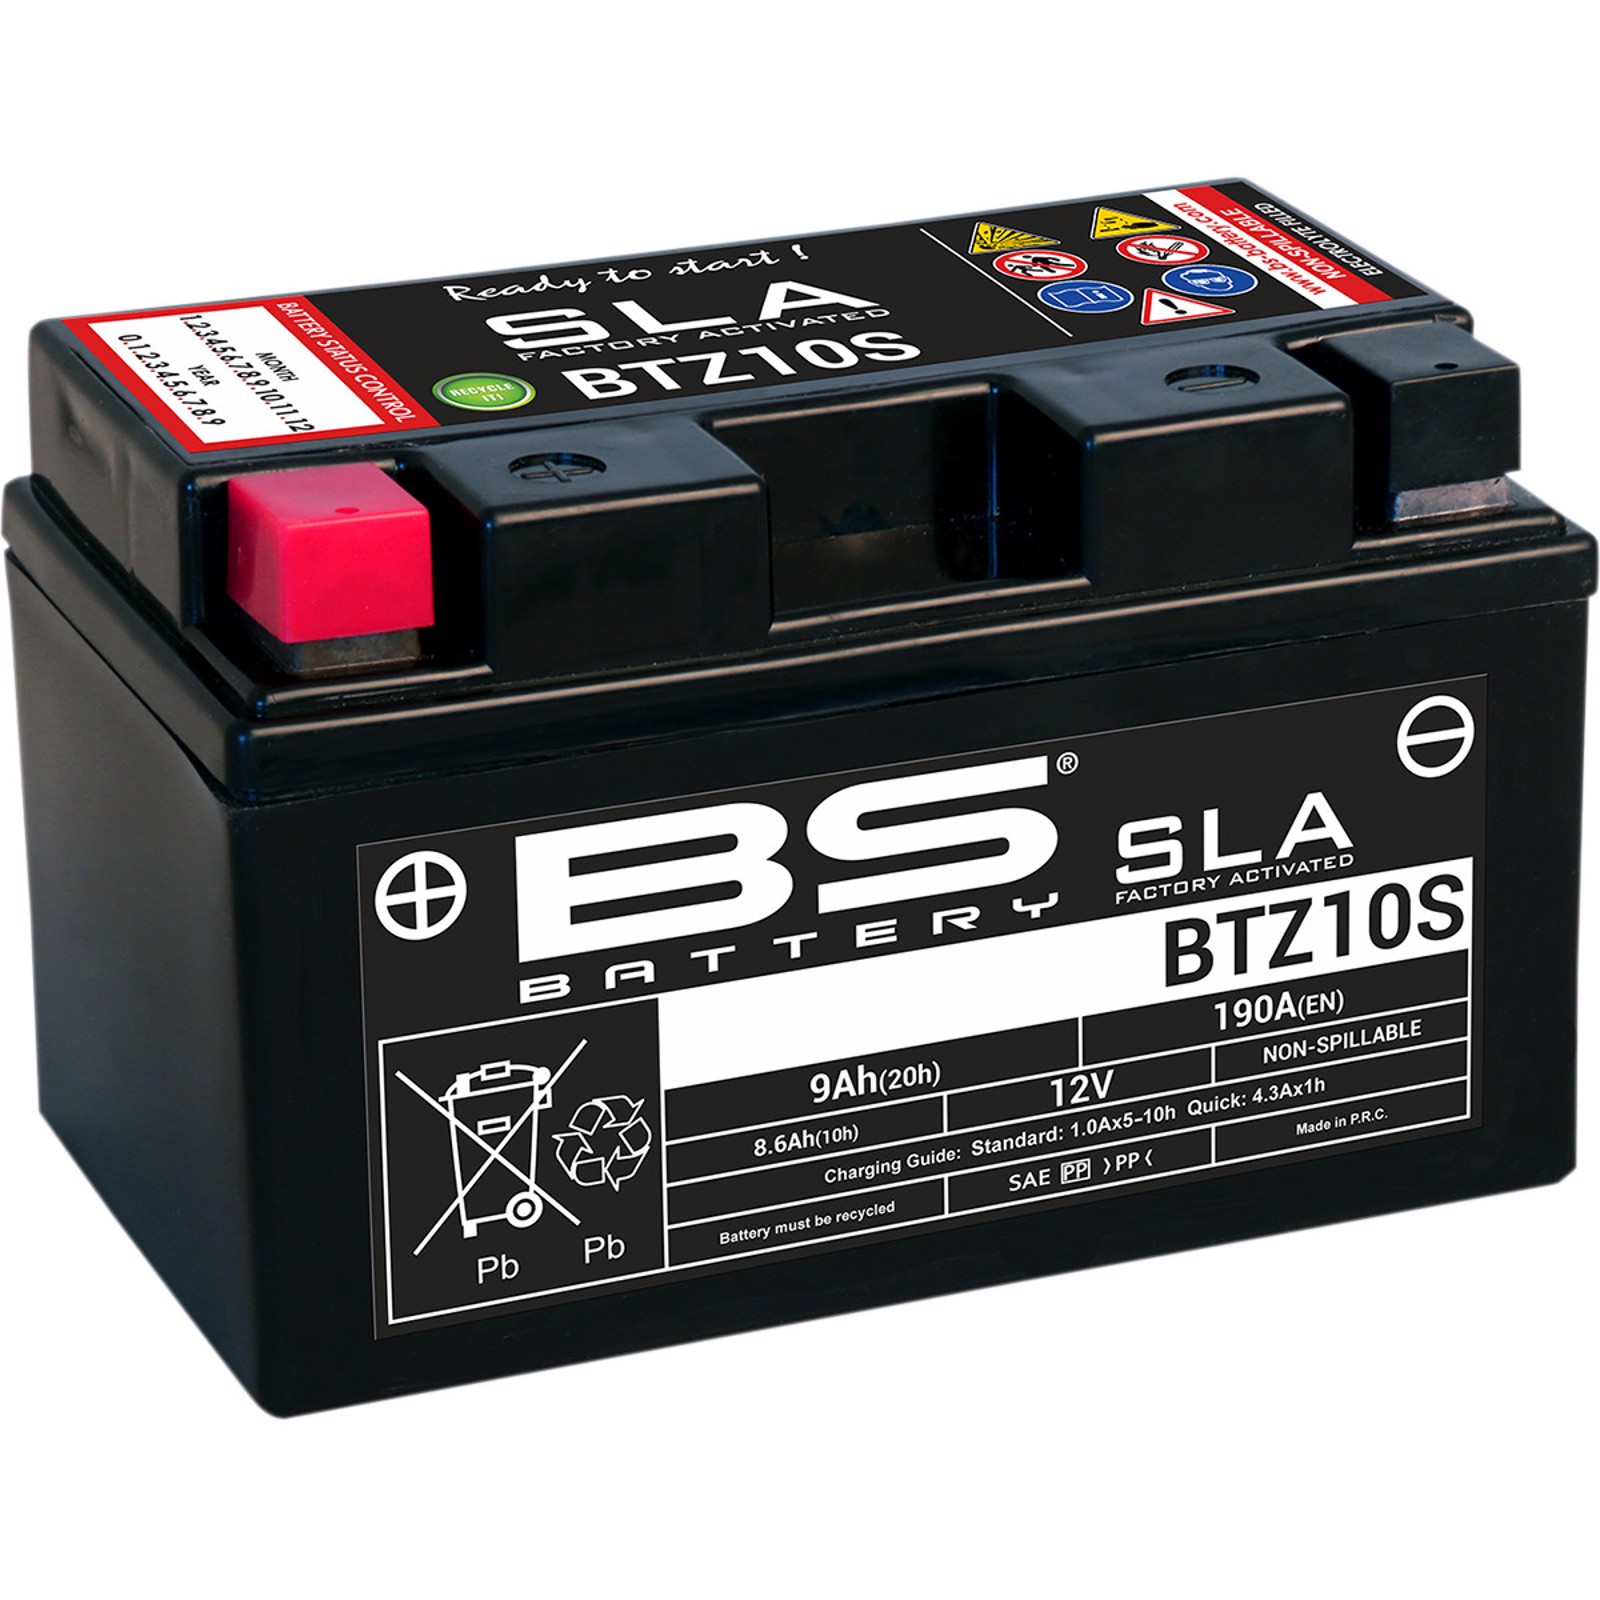 Bs battery. Аккумулятор BS-Battery btz10s-BS. BS Battery 300636. Btz10s (fa) аккумулятор BS SLA, 12в, 8.6 Ач, 190 а 150x88x93, прямая (+ / -), (ytz10s). Аккумулятор SLA BS 12 10.